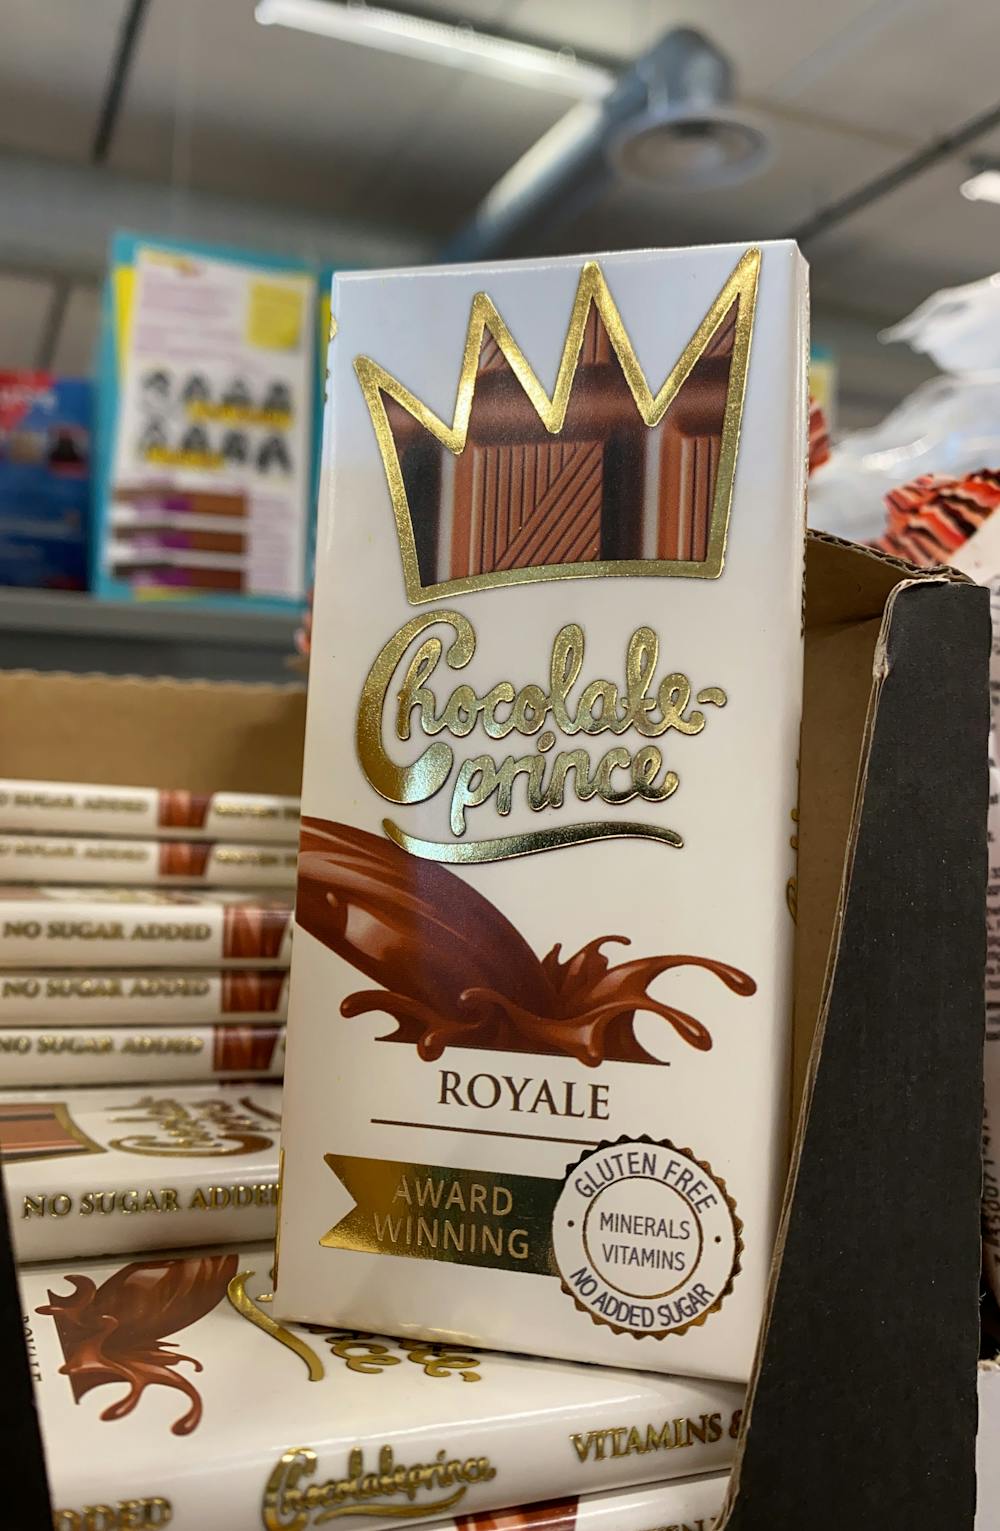 Royale, Chocolate prince